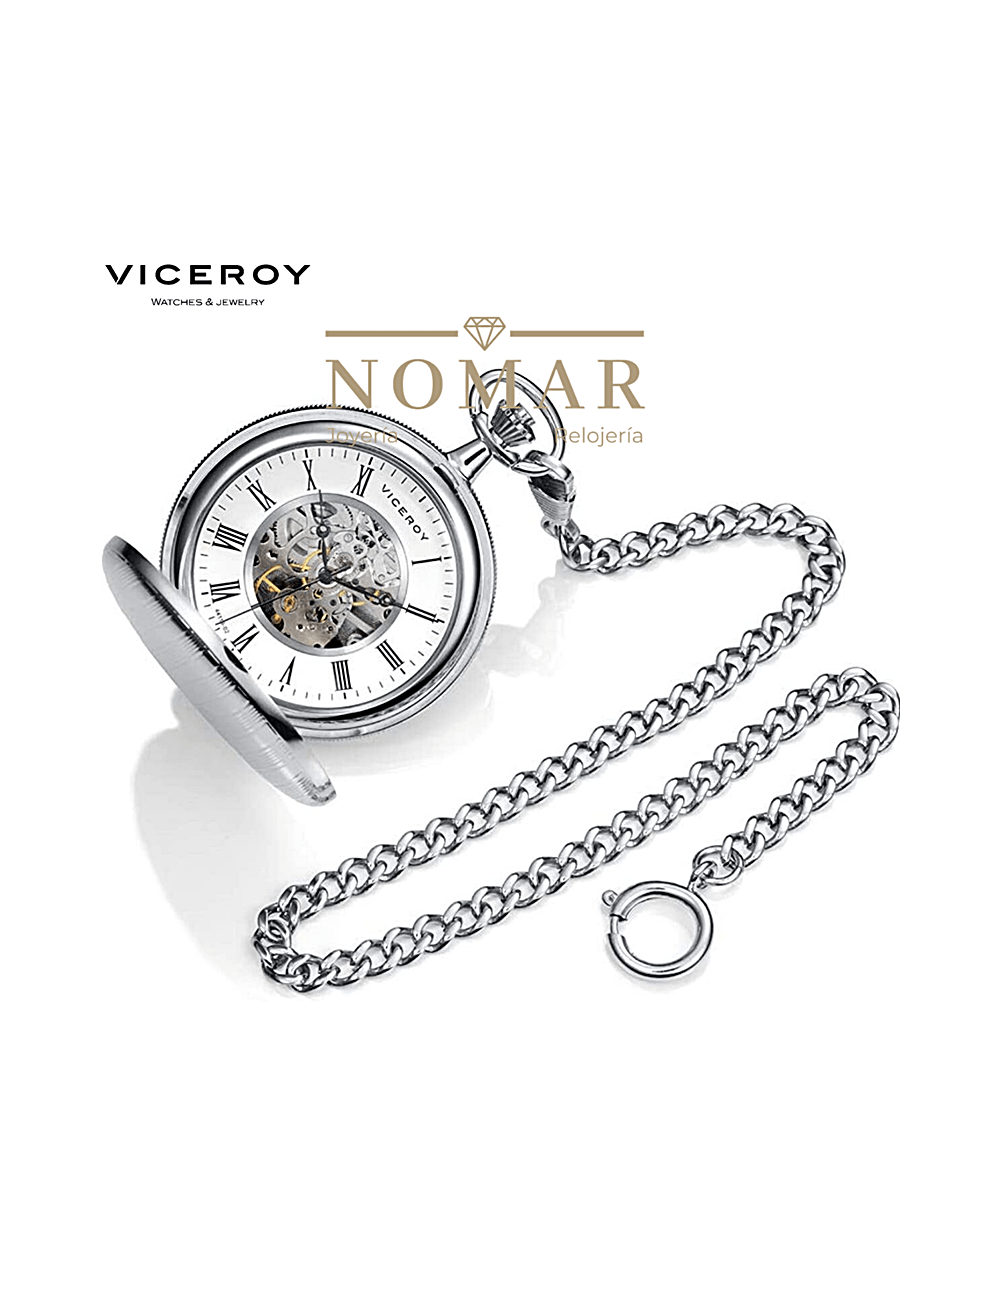 aluminio Envolver Malgastar Reloj Viceroy de hombre bolsillo Pocket mecánico cuerda plateado